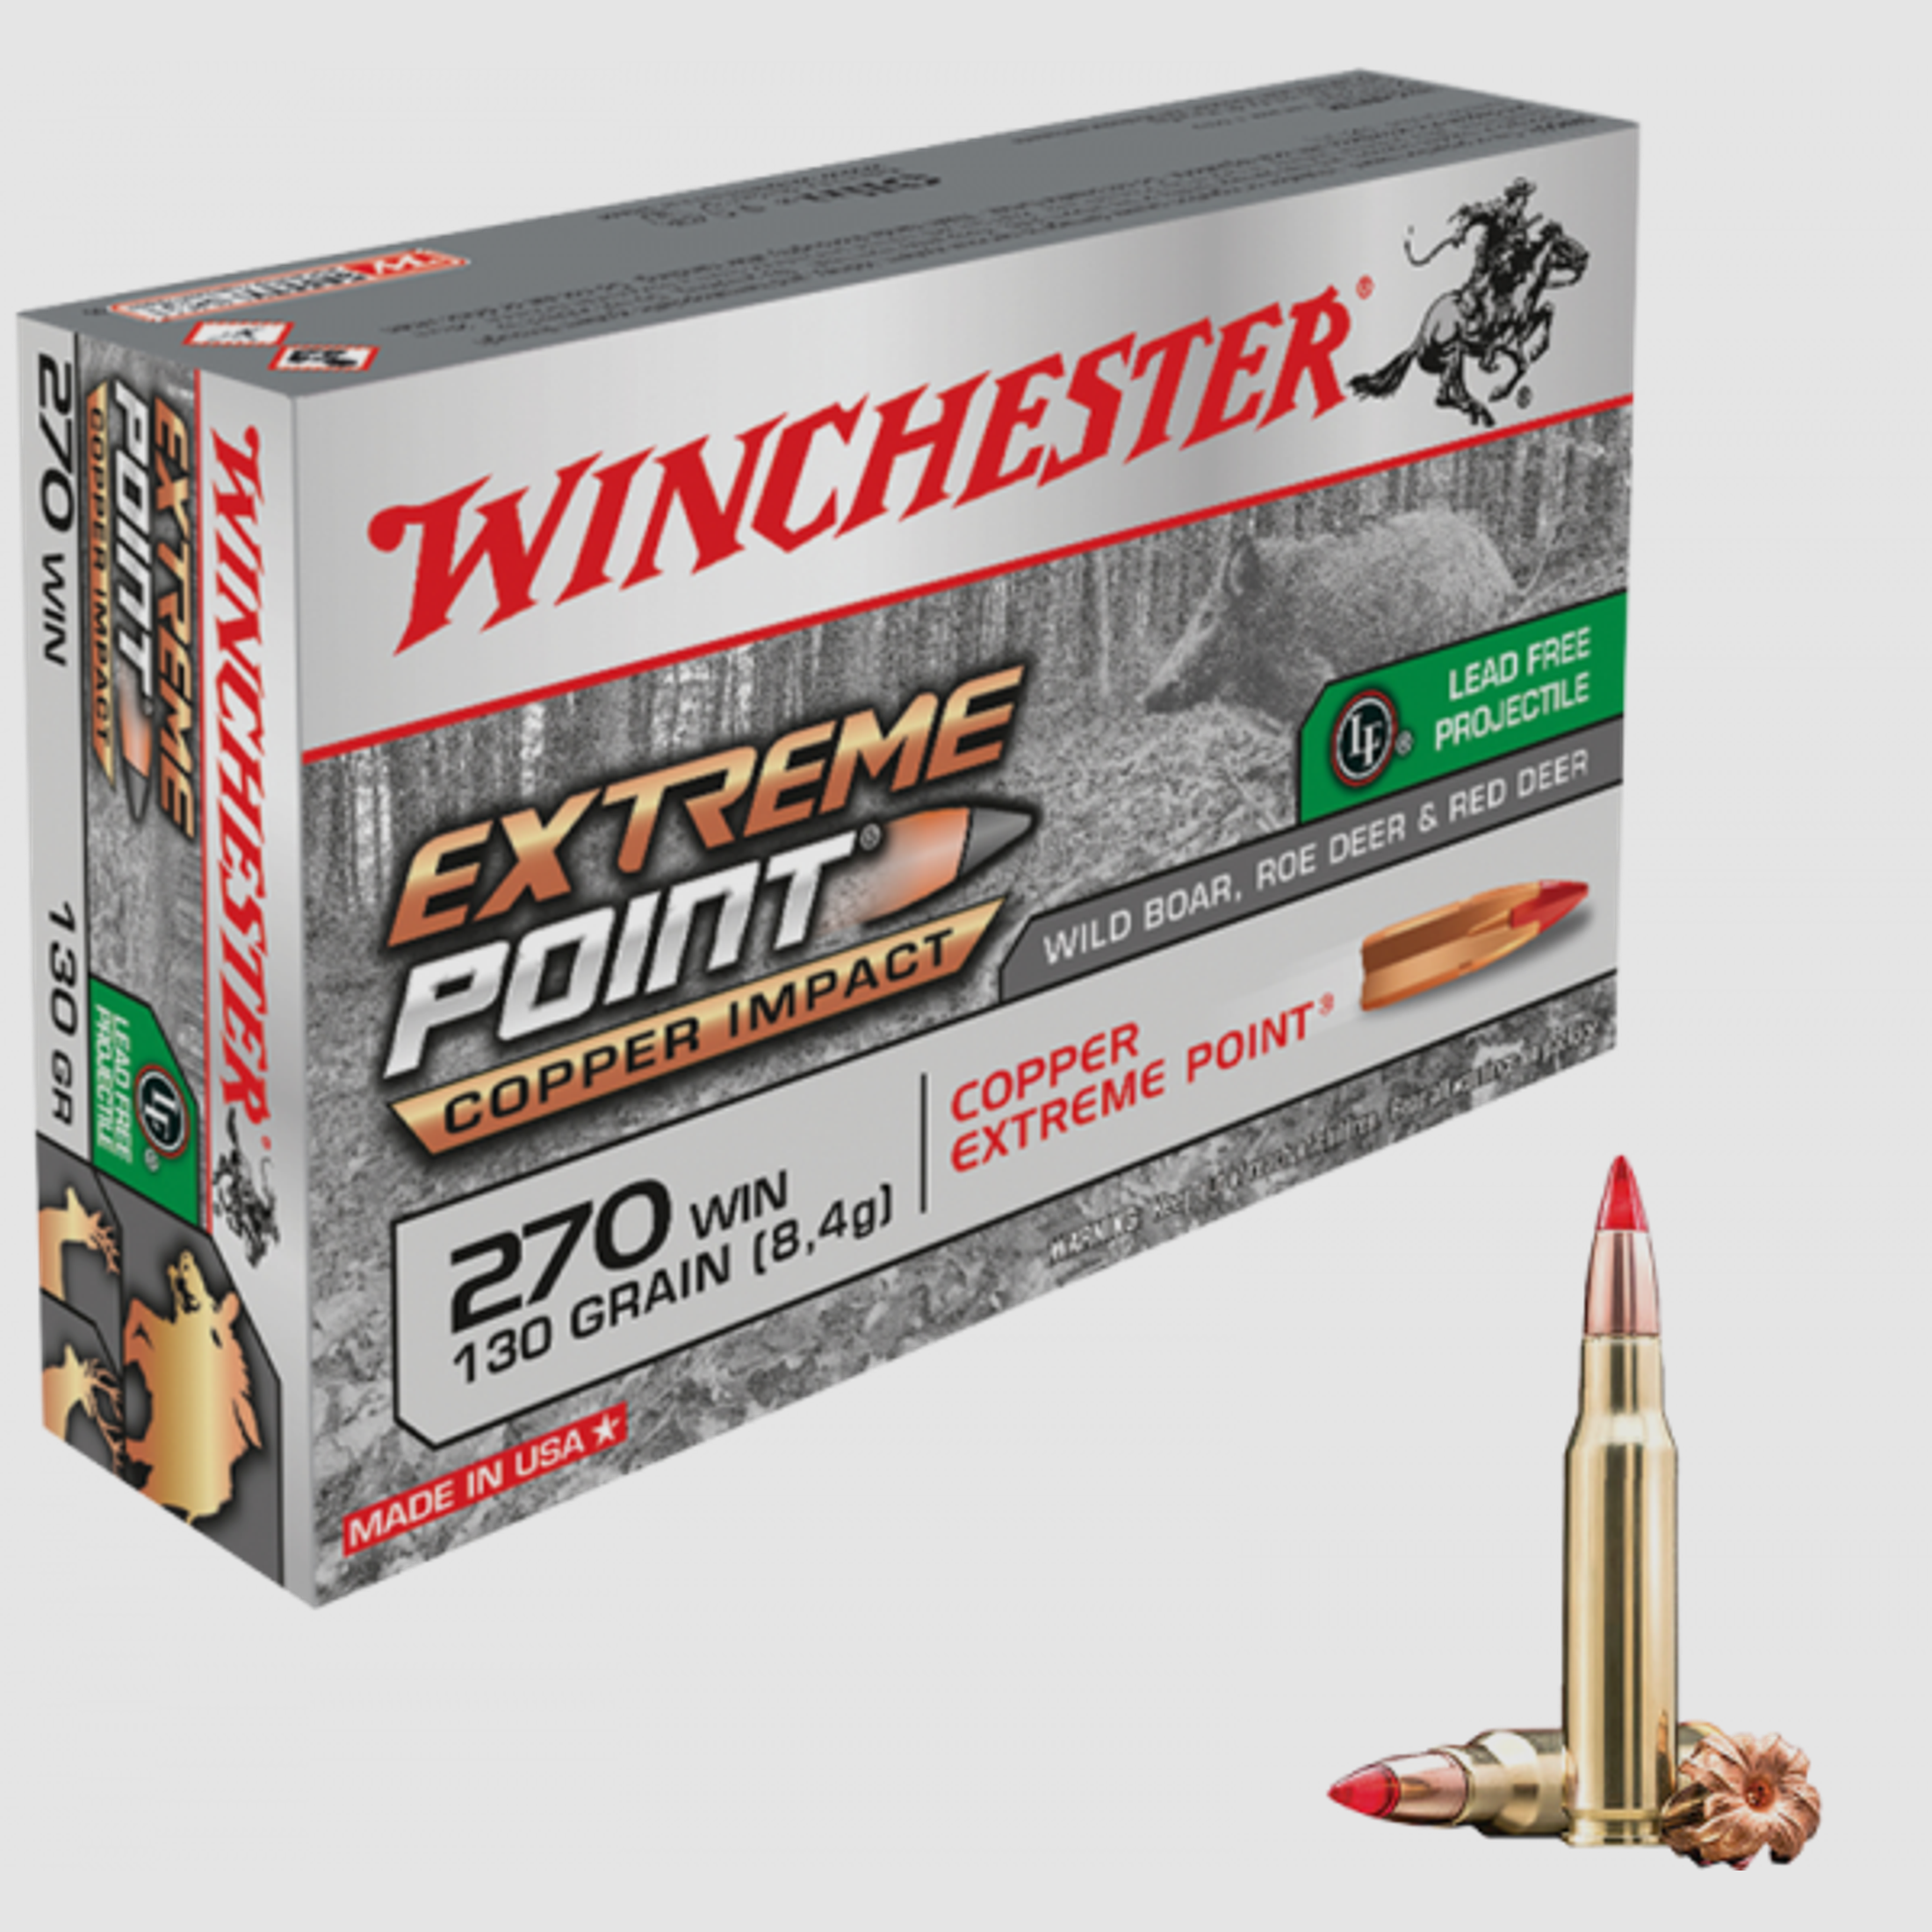 Winchester Extreme Point Copper Impact .300 Win Mag 150 grs Büchsenpatronen